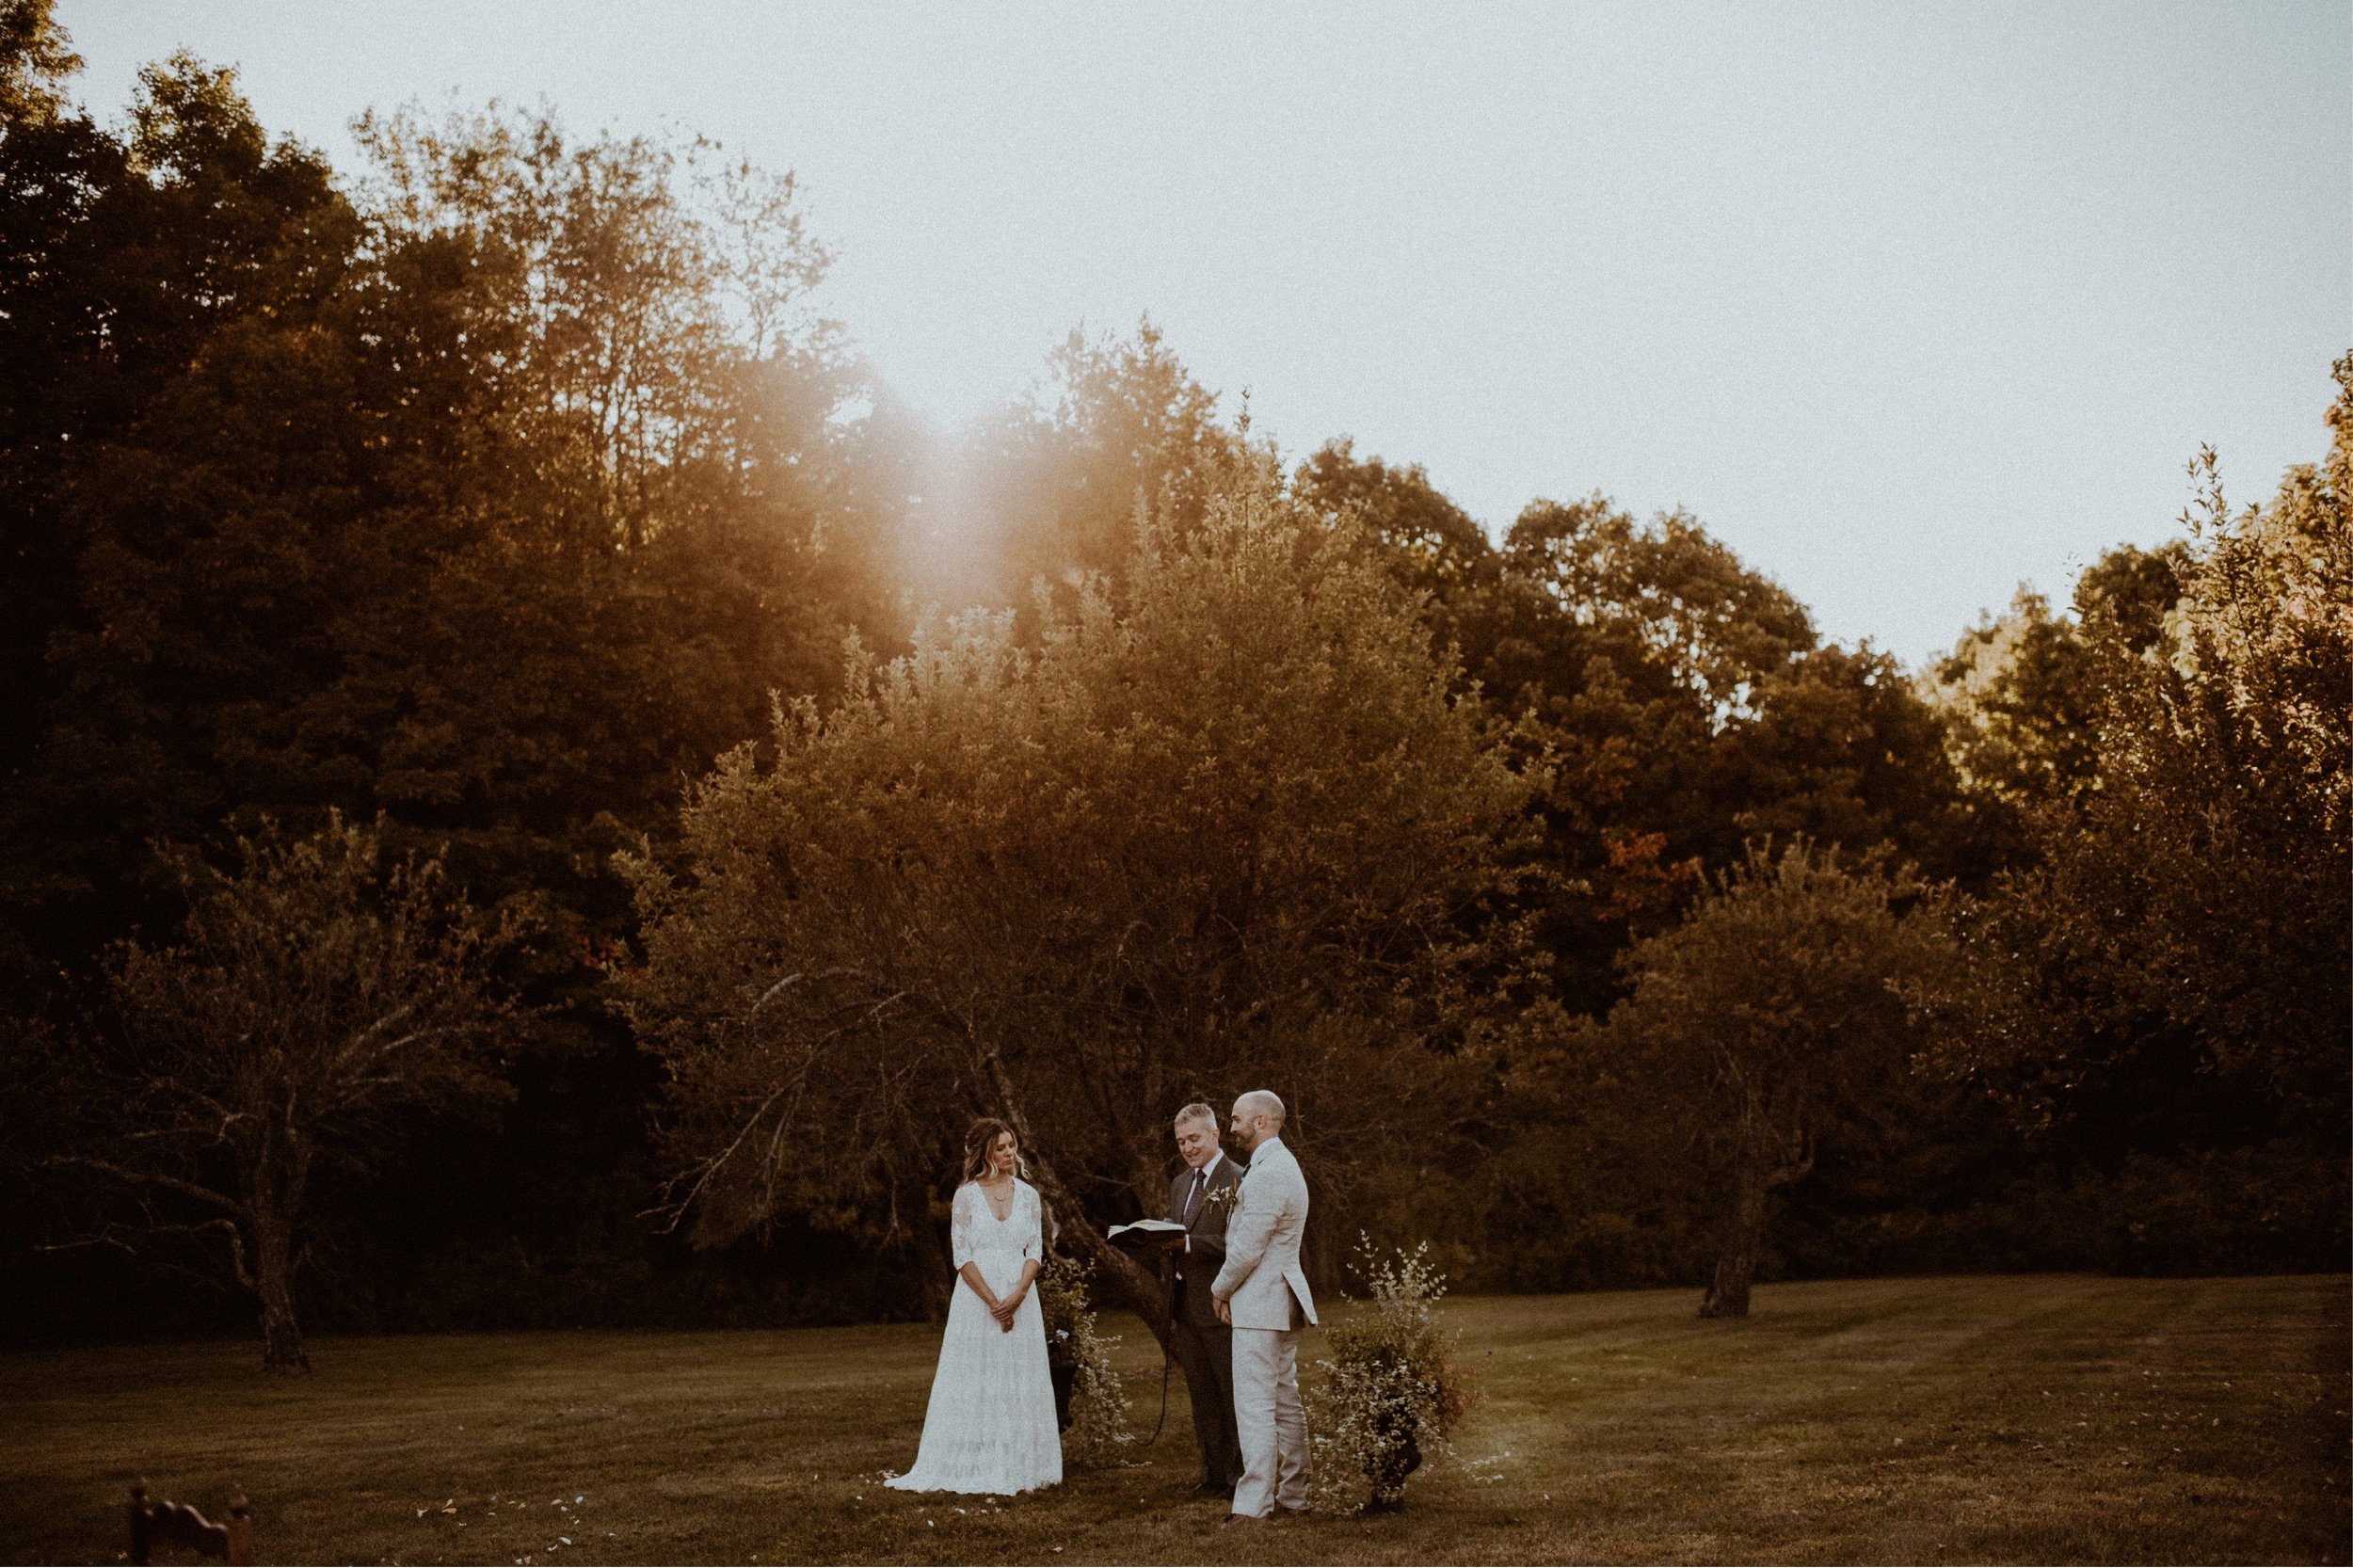 076_Gloriosa & Co Fall Wedding at The Curtis House Ashfield MA - Vanessa Alves Photography.jpg